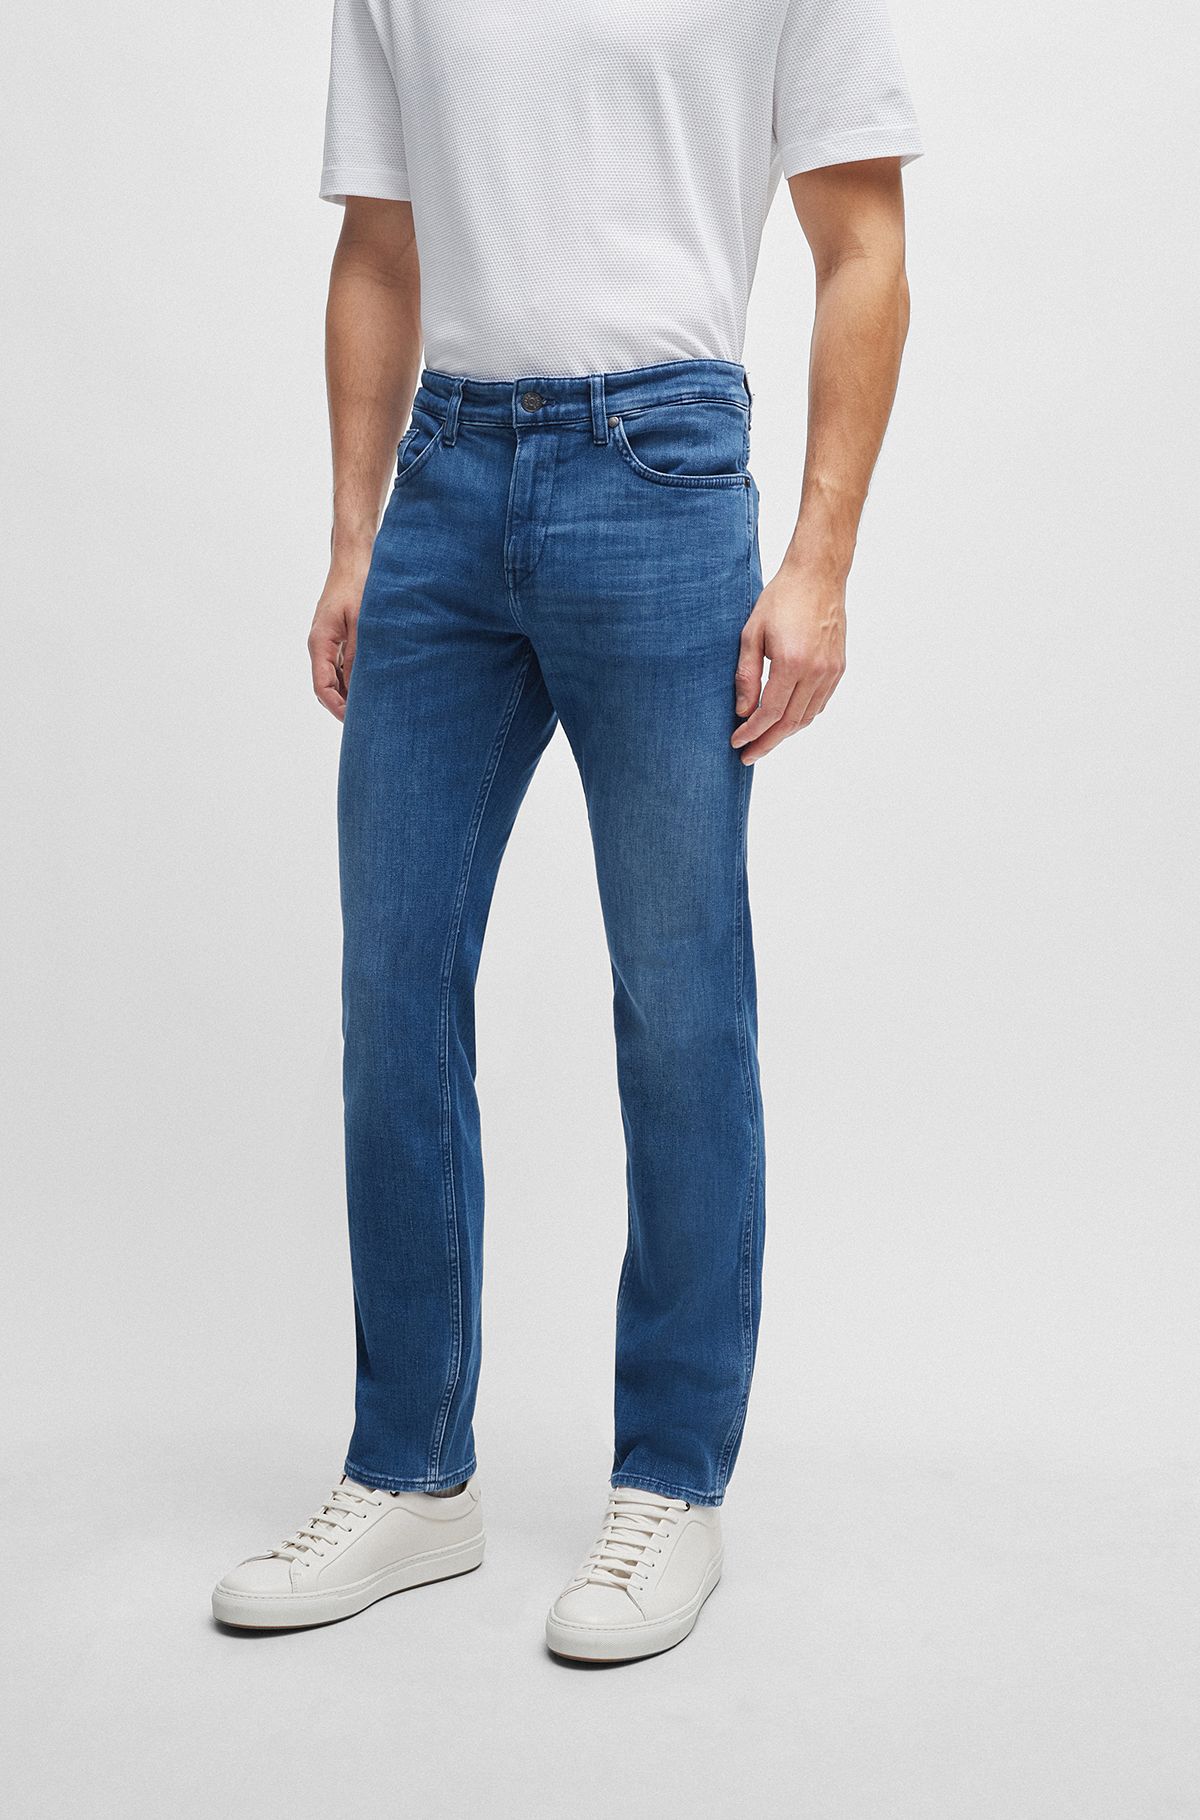 BOSS - Slim-fit jeans in blue Italian cashmere-touch denim